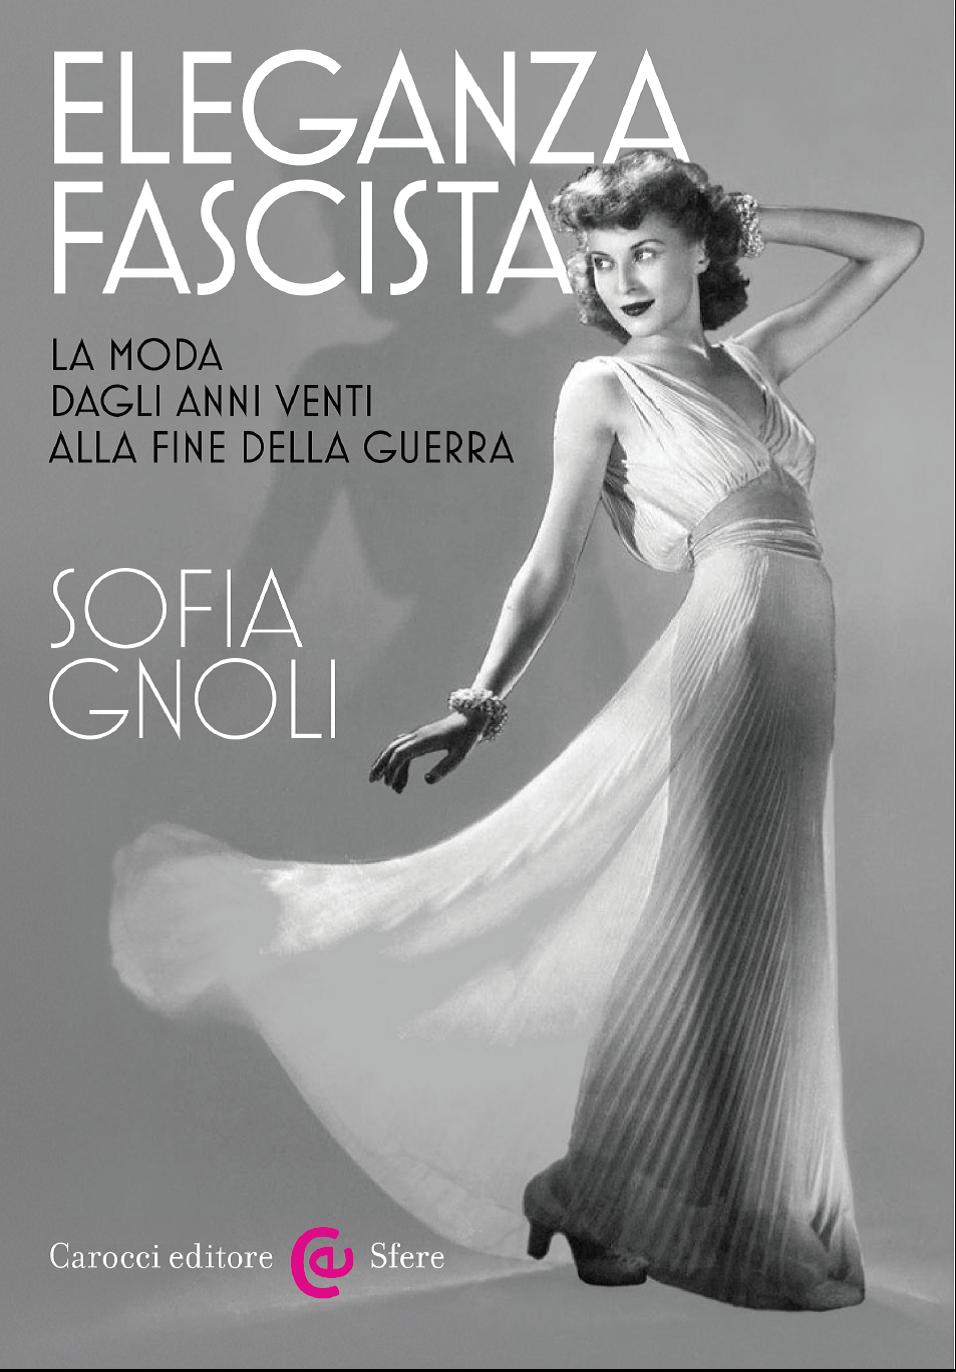 Sofia Gnoli, Eleganza fascista (Carocci 2017)